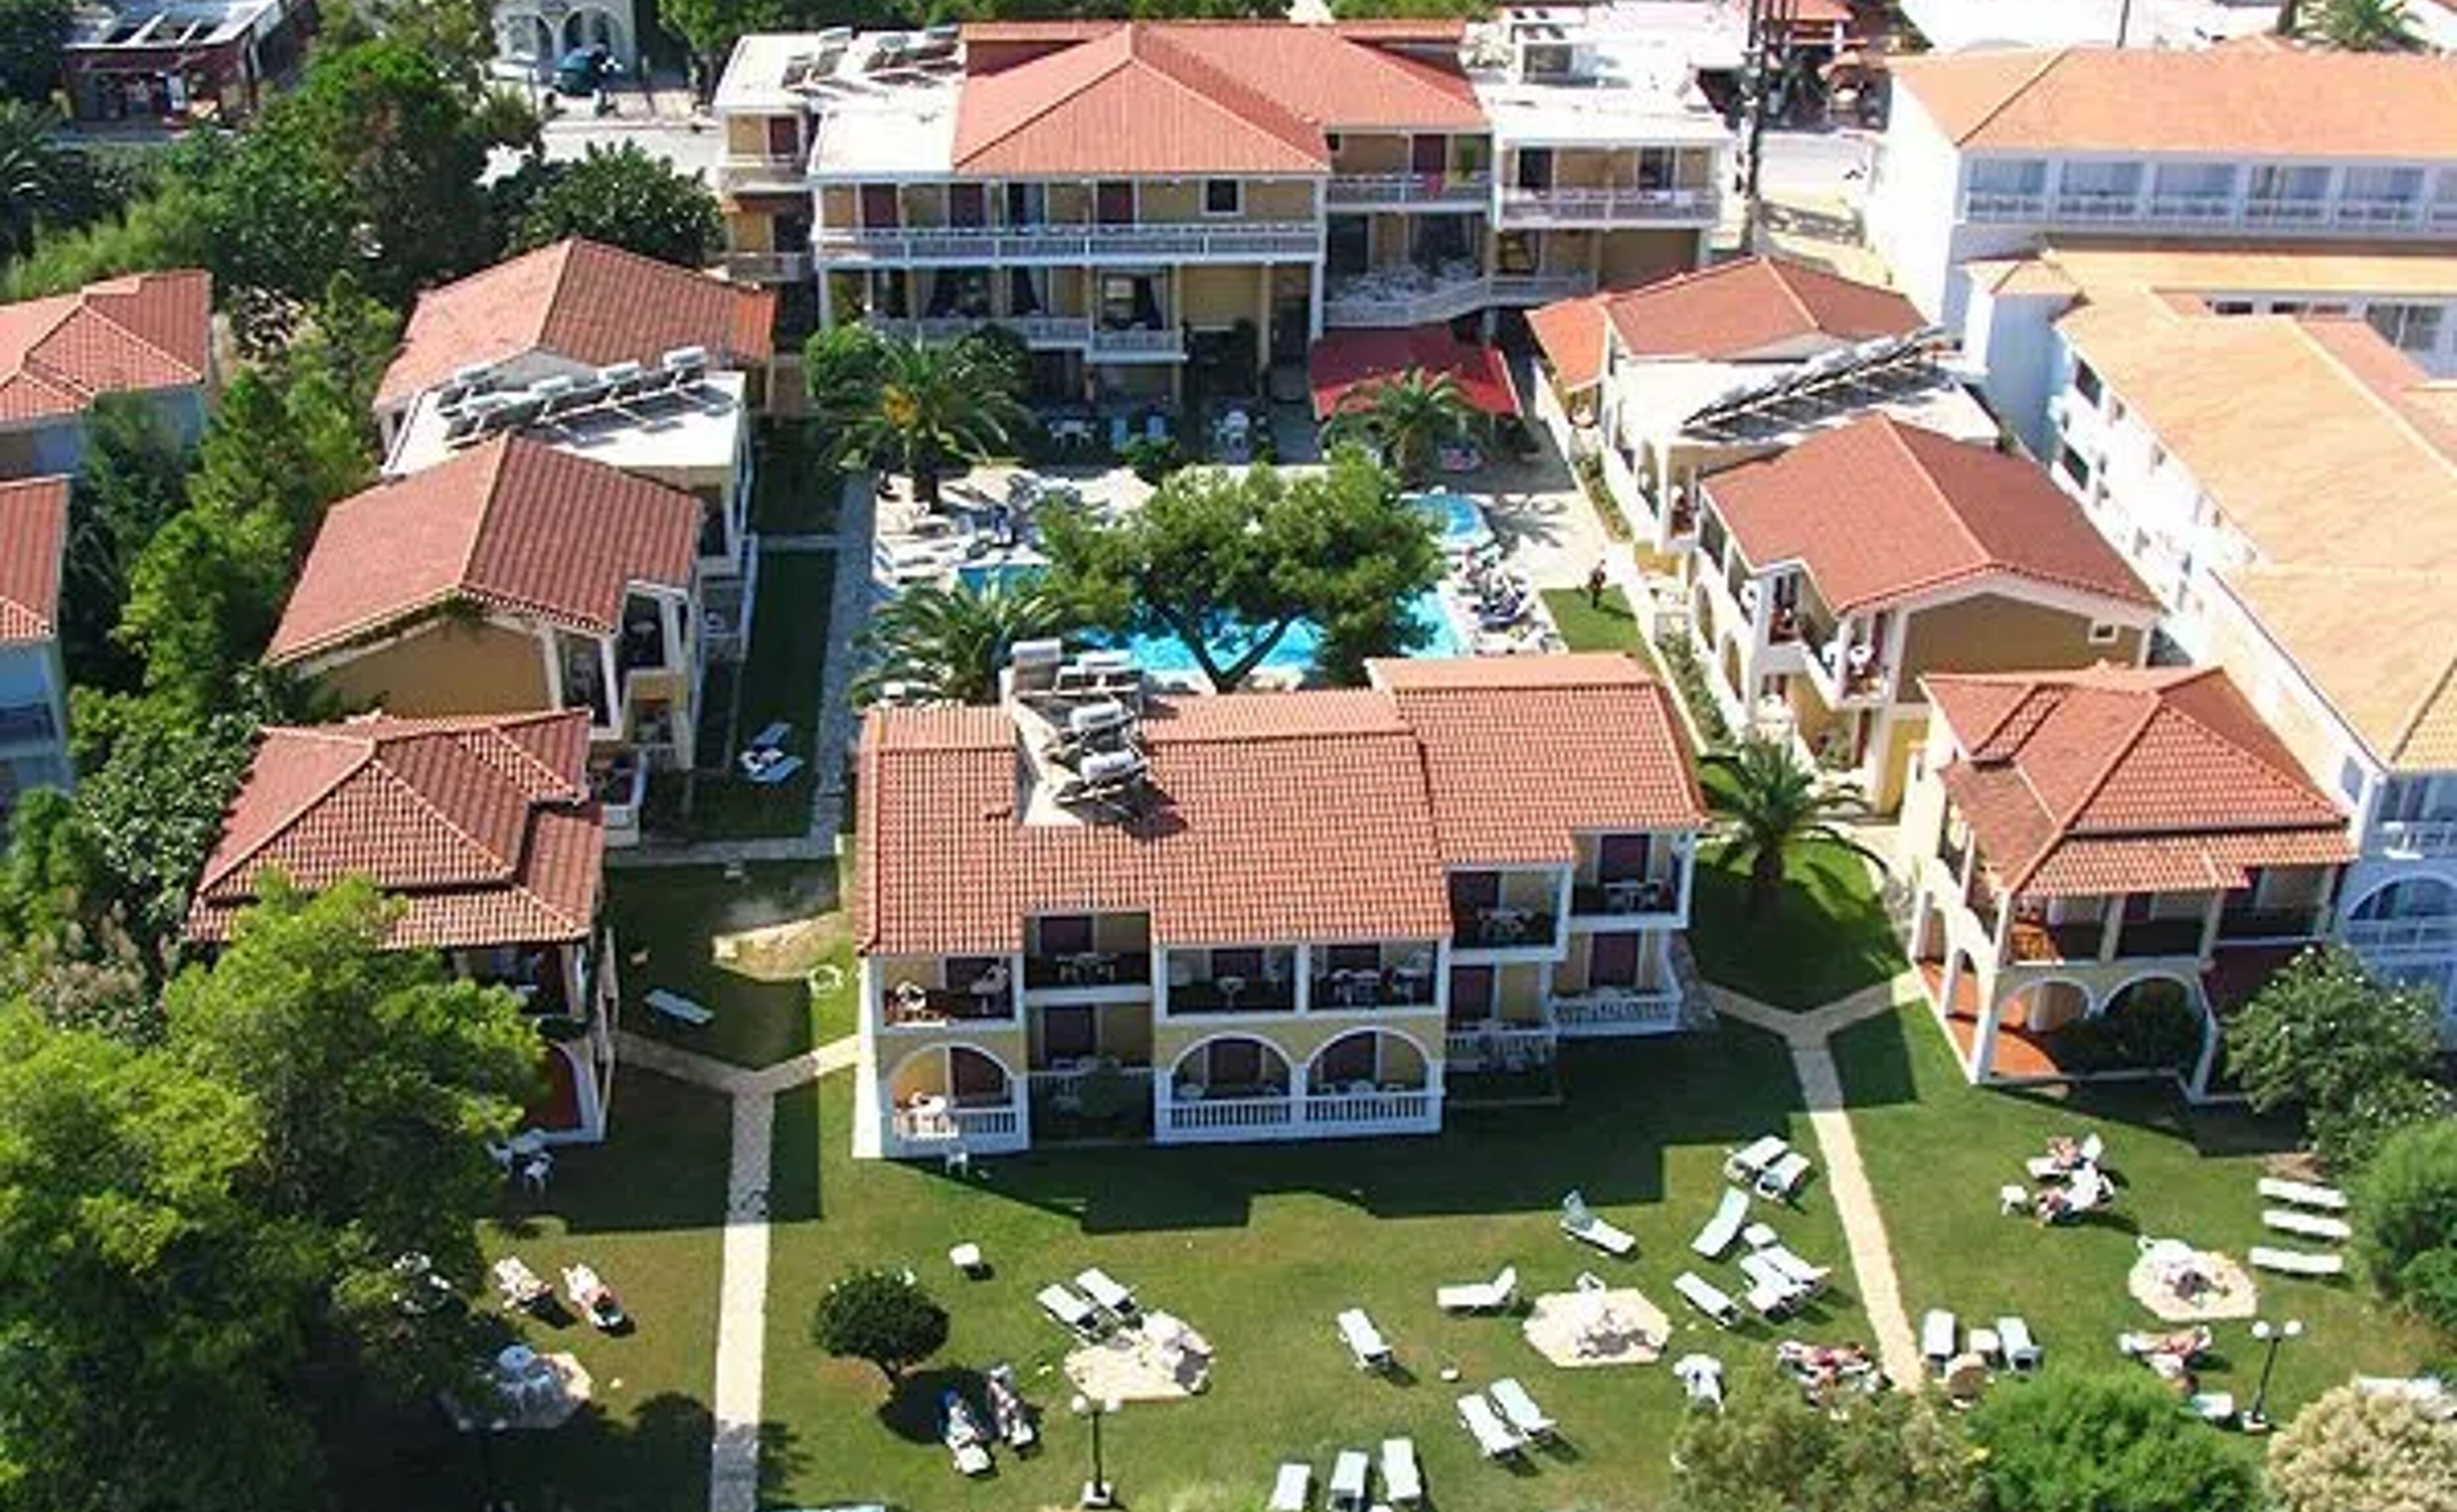 Iliessa Beach Hotel